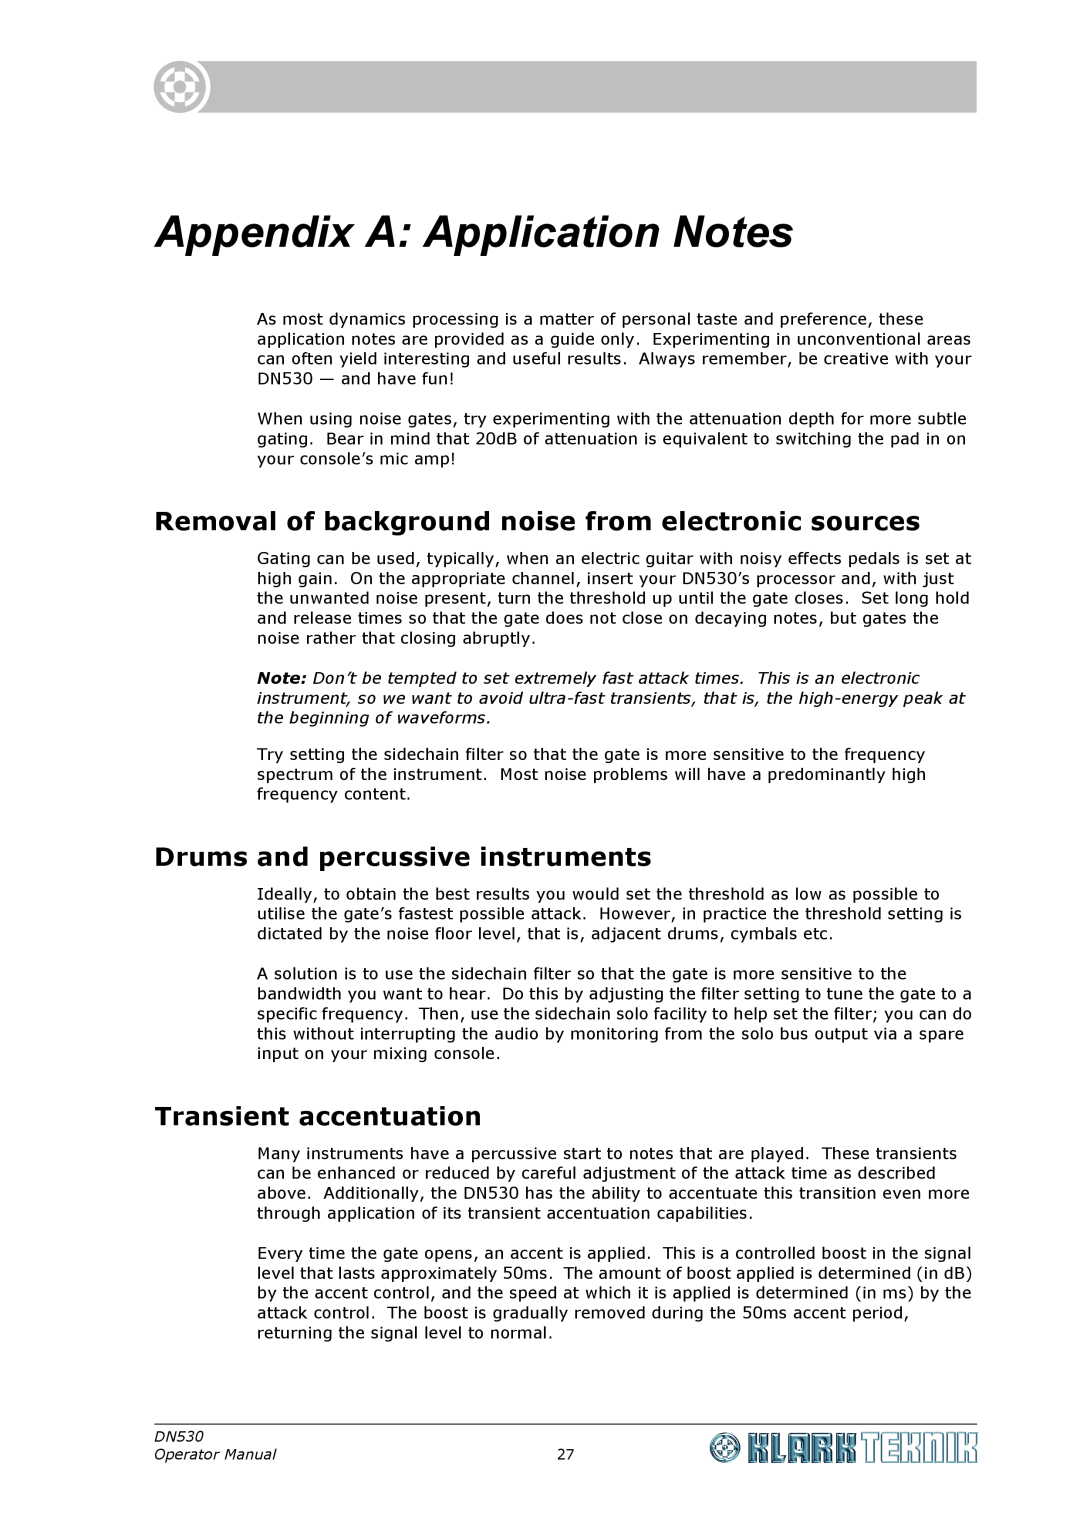 Klark Teknik DN530 specifications Appendix A Application Notes, Drums and percussive instruments, Transient accentuation 